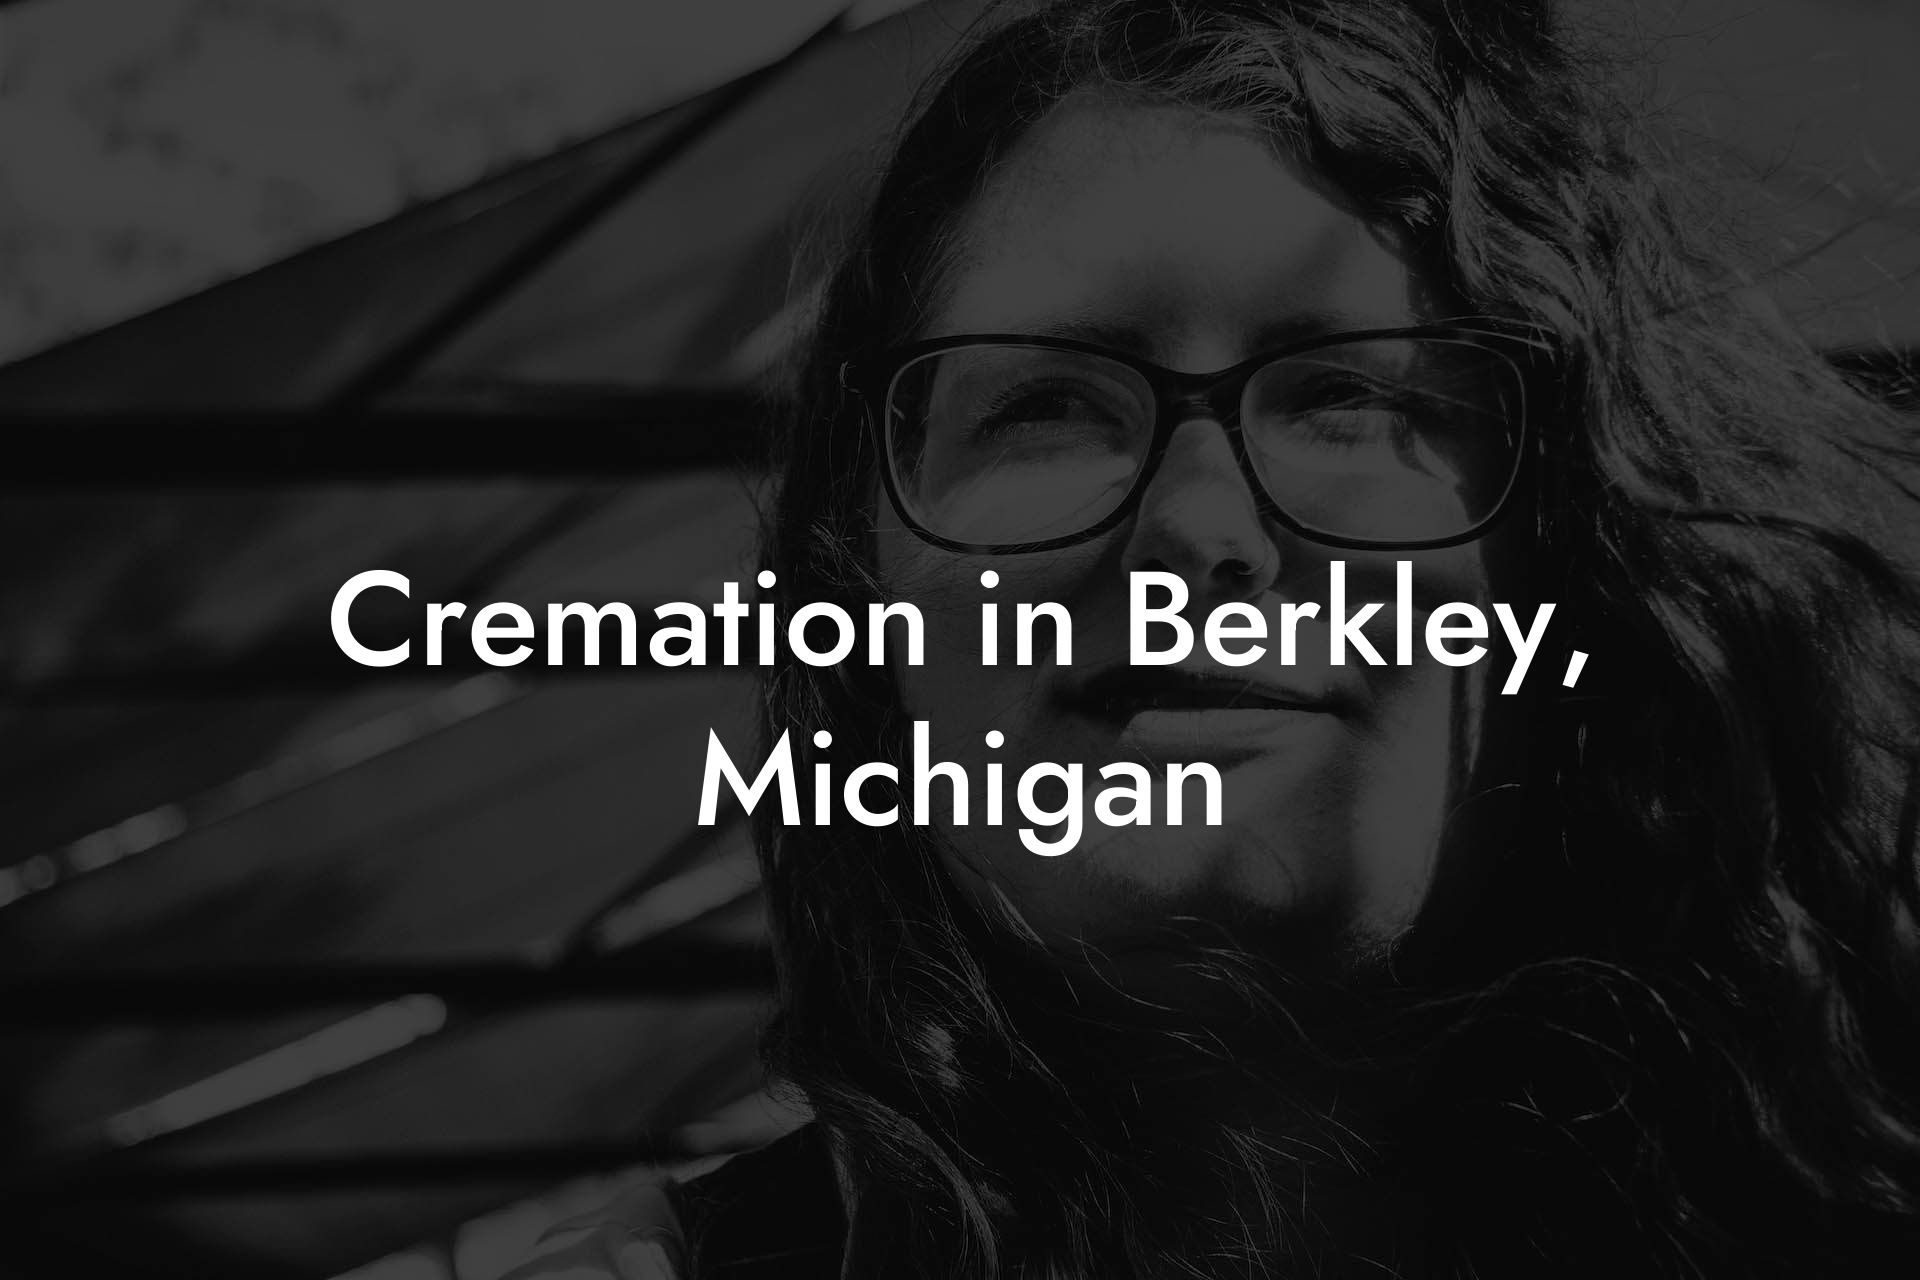 Cremation in Berkley, Michigan